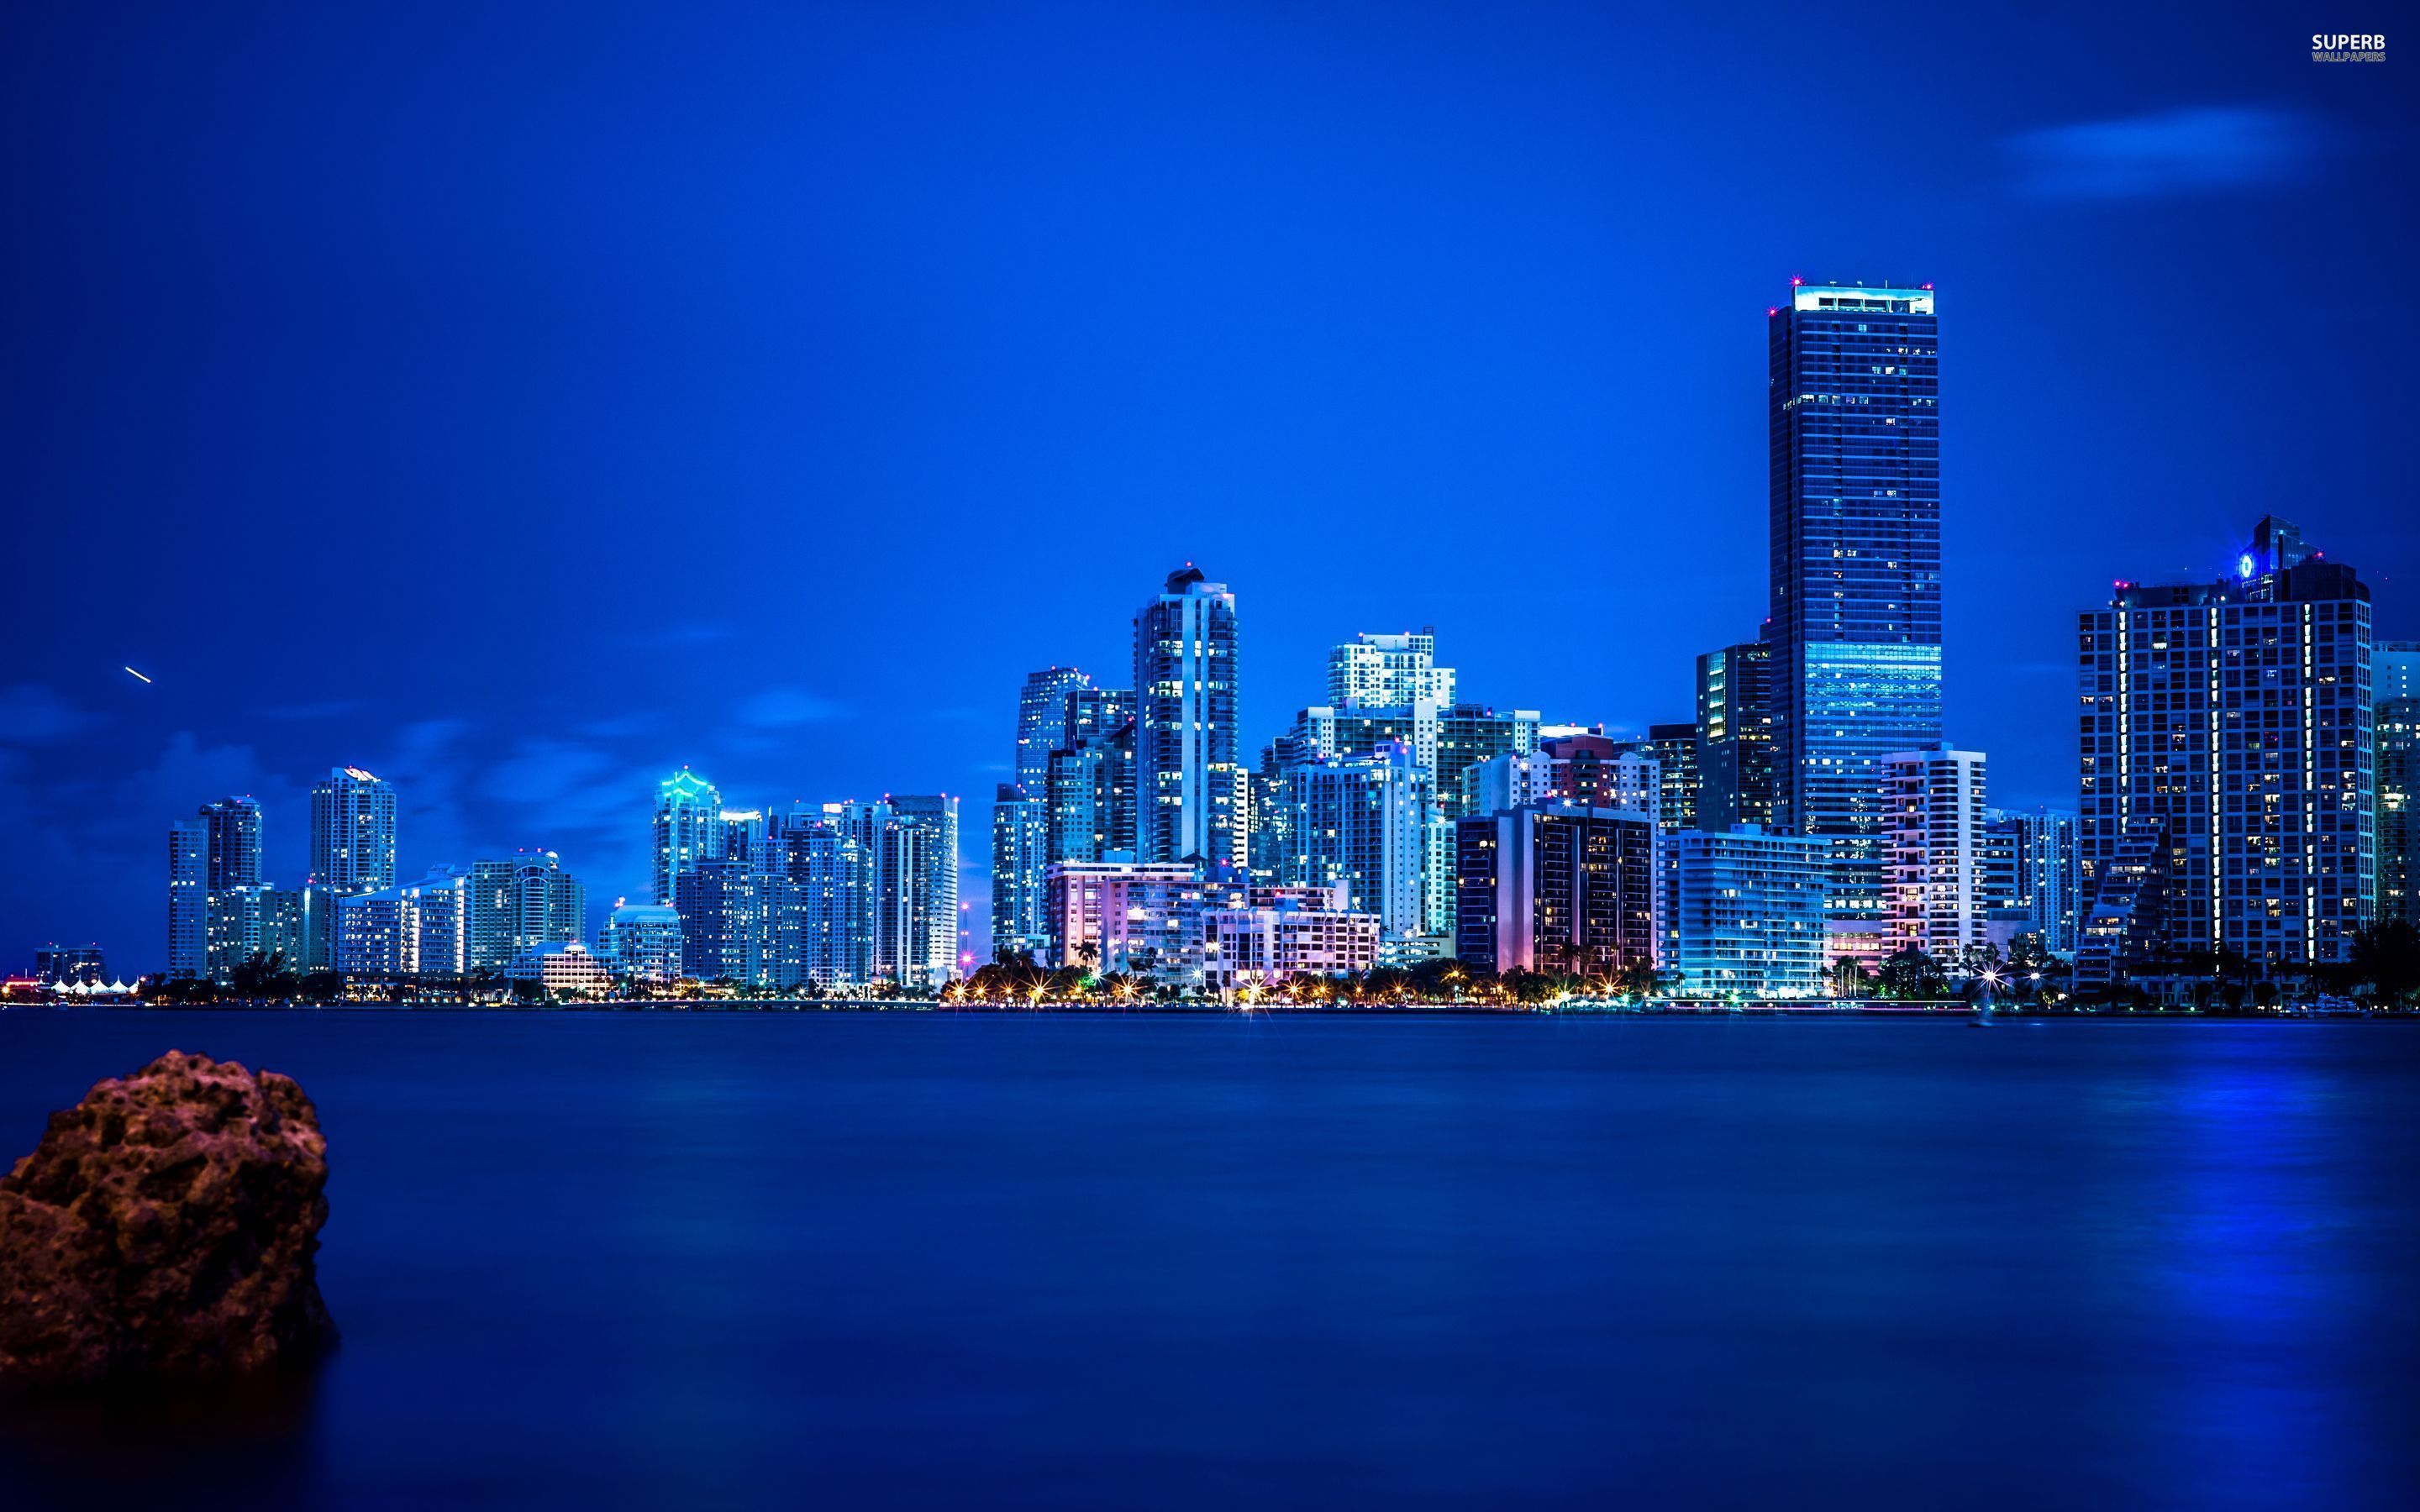 Miami night skyline wallpaper - World wallpapers - #26366